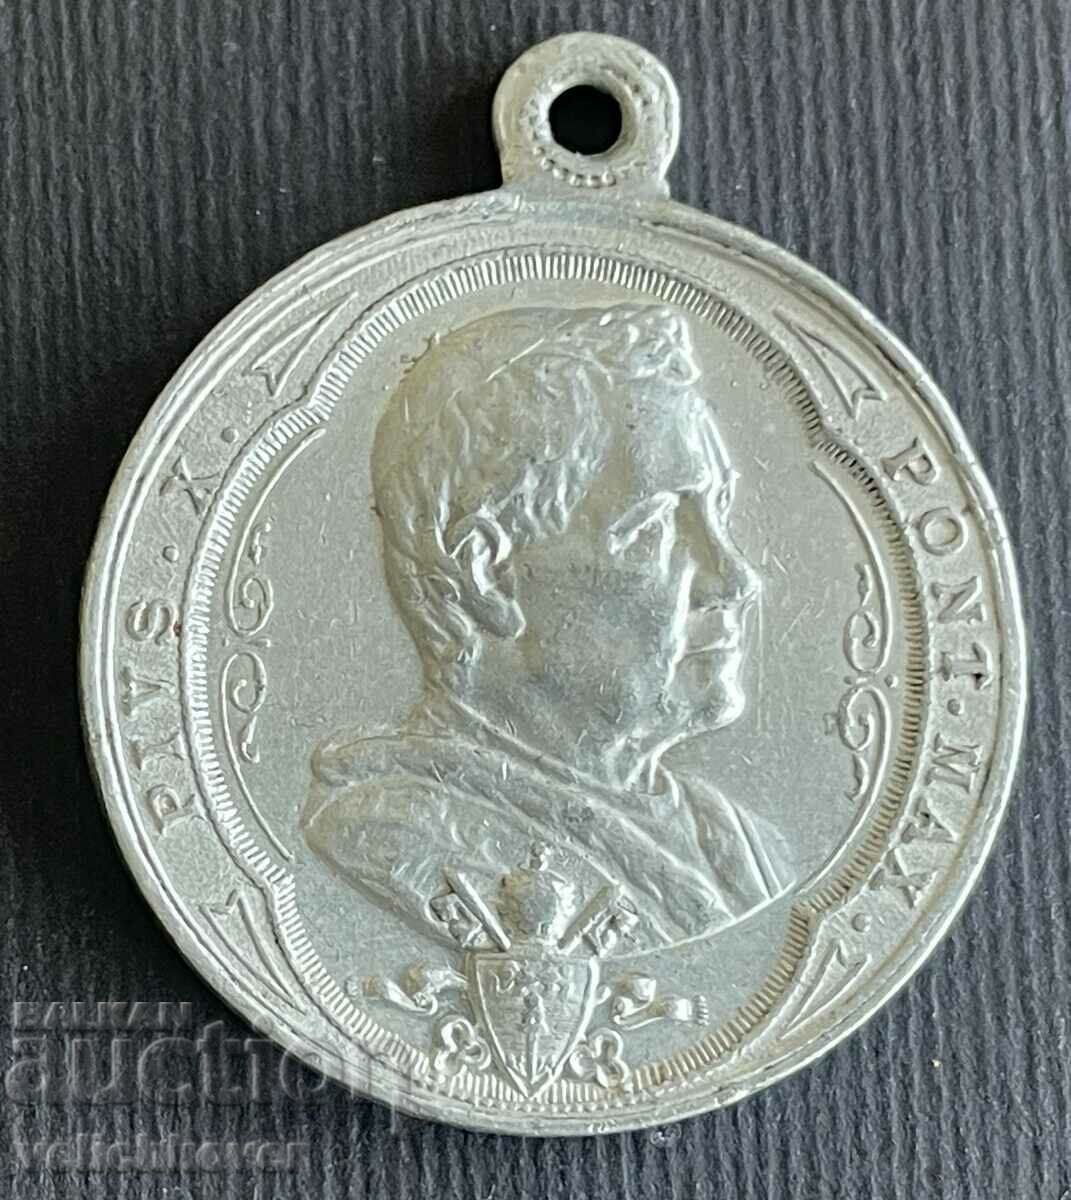 35741 Ватикана Италия католически медал жетон Папа Пий Х